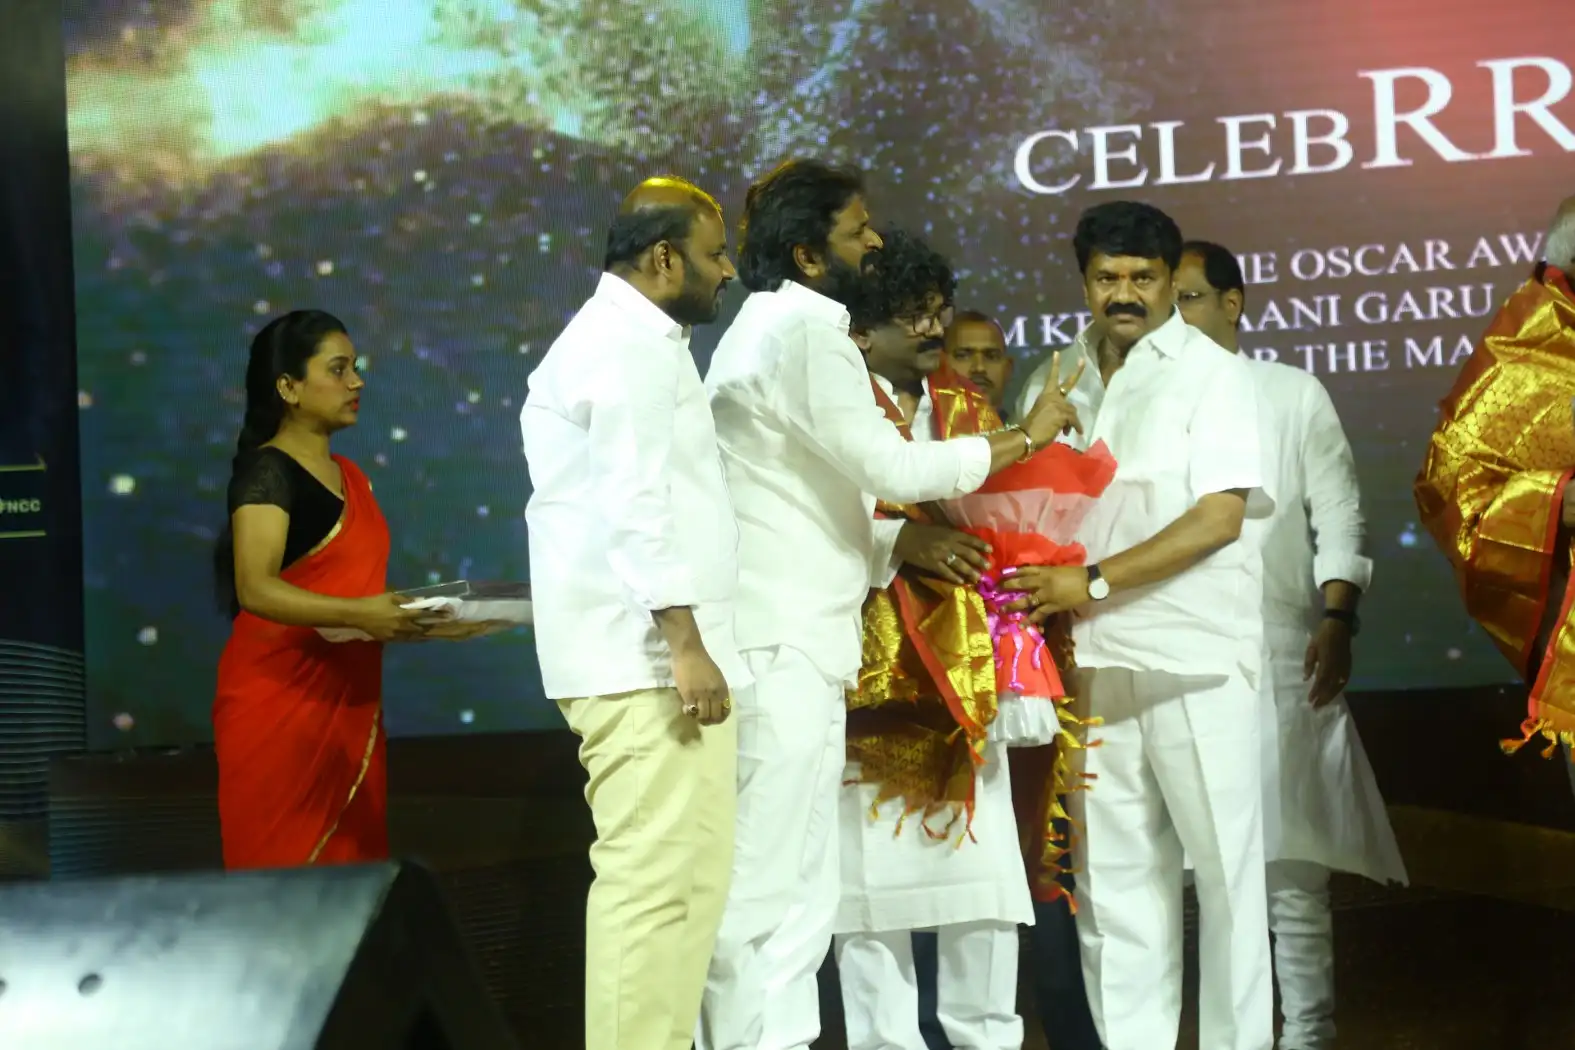 Tollywood Film Chamber felicitated oscar winners M M Keeravani Chandrabose